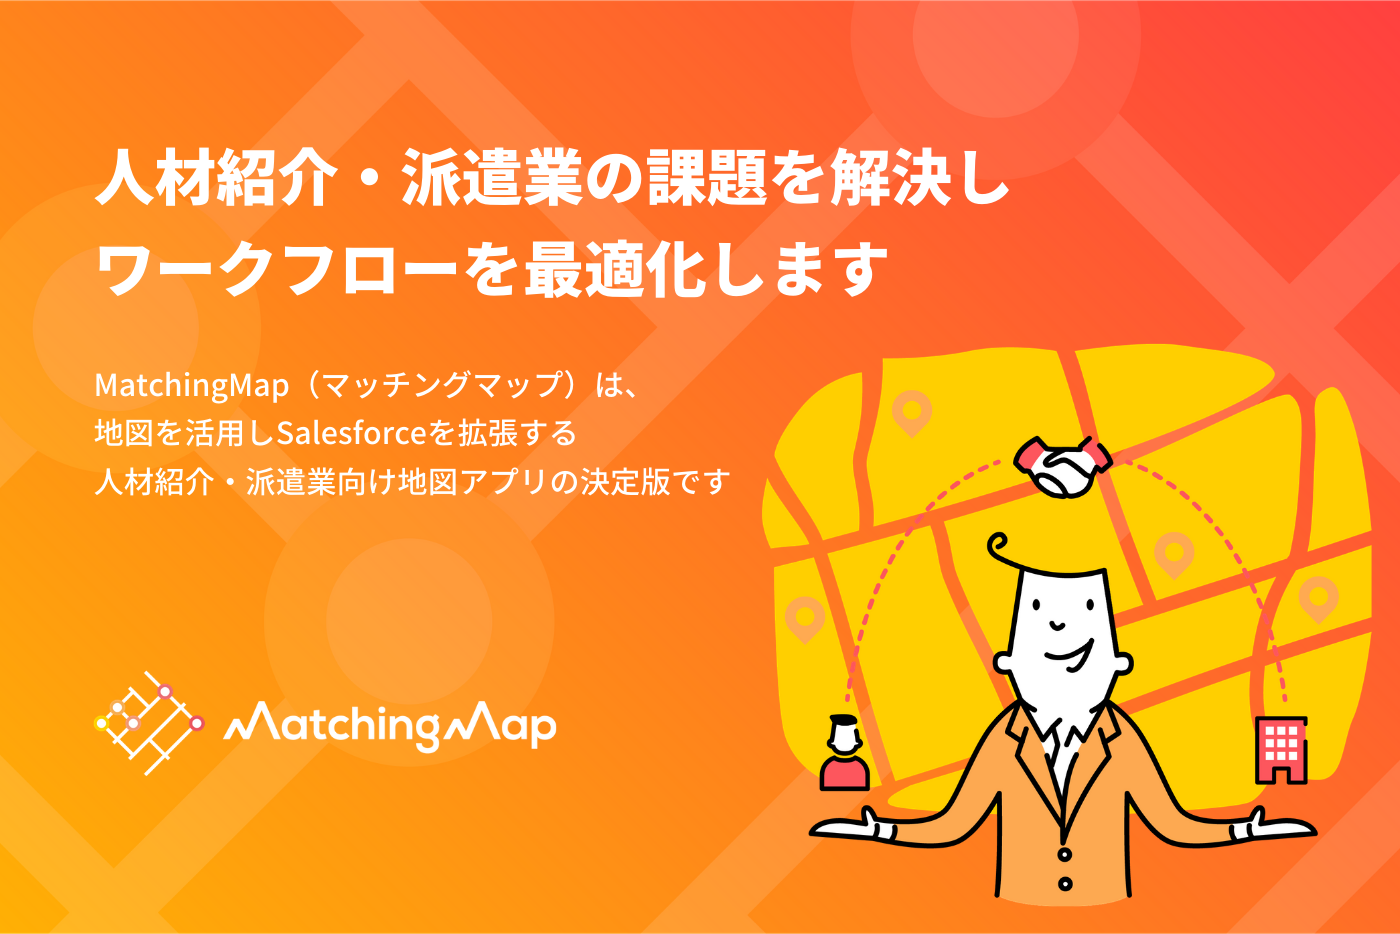 Matchingmap 紹介業務の効率と品質を上げる人材紹介 派遣業向け地図アプリ 株式会社co Meeting Appexchange